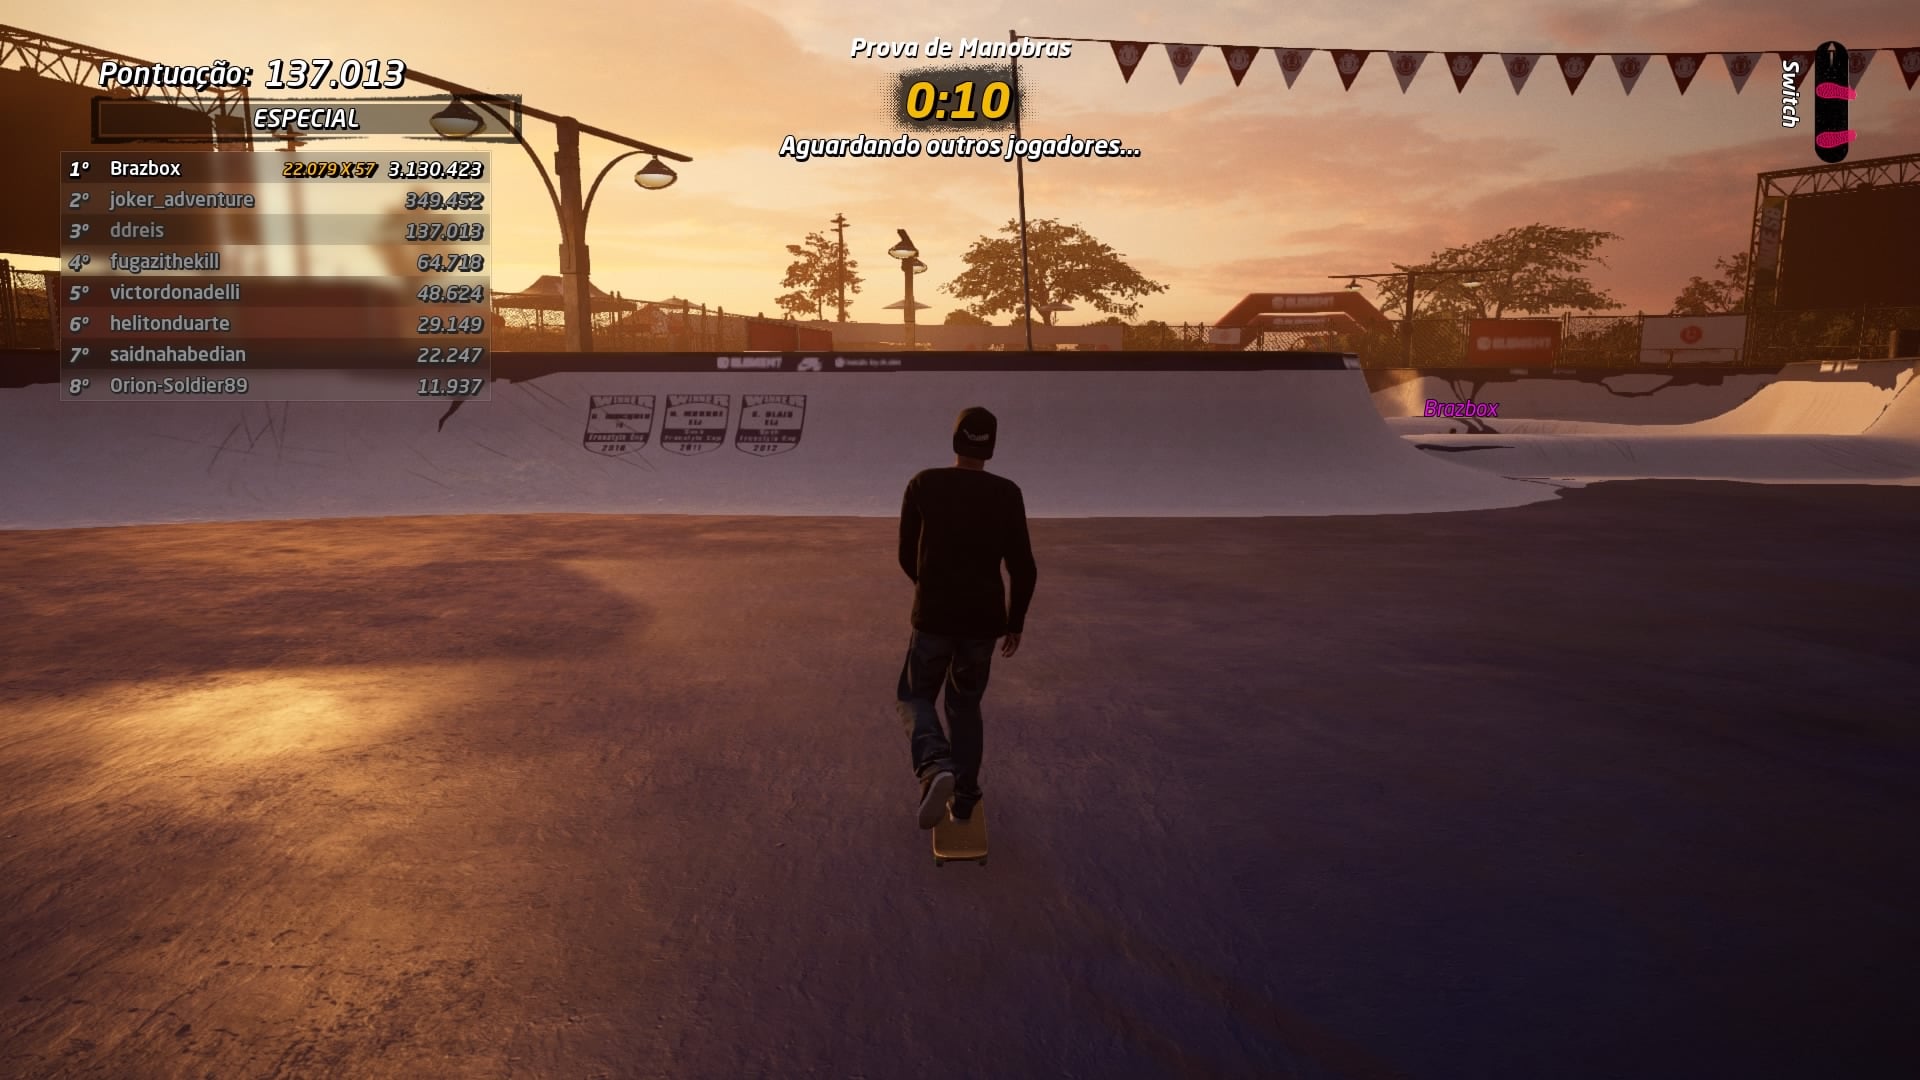 Vale a Pena? Tony Hawk's Pro Skater 3 (PlayStation 2